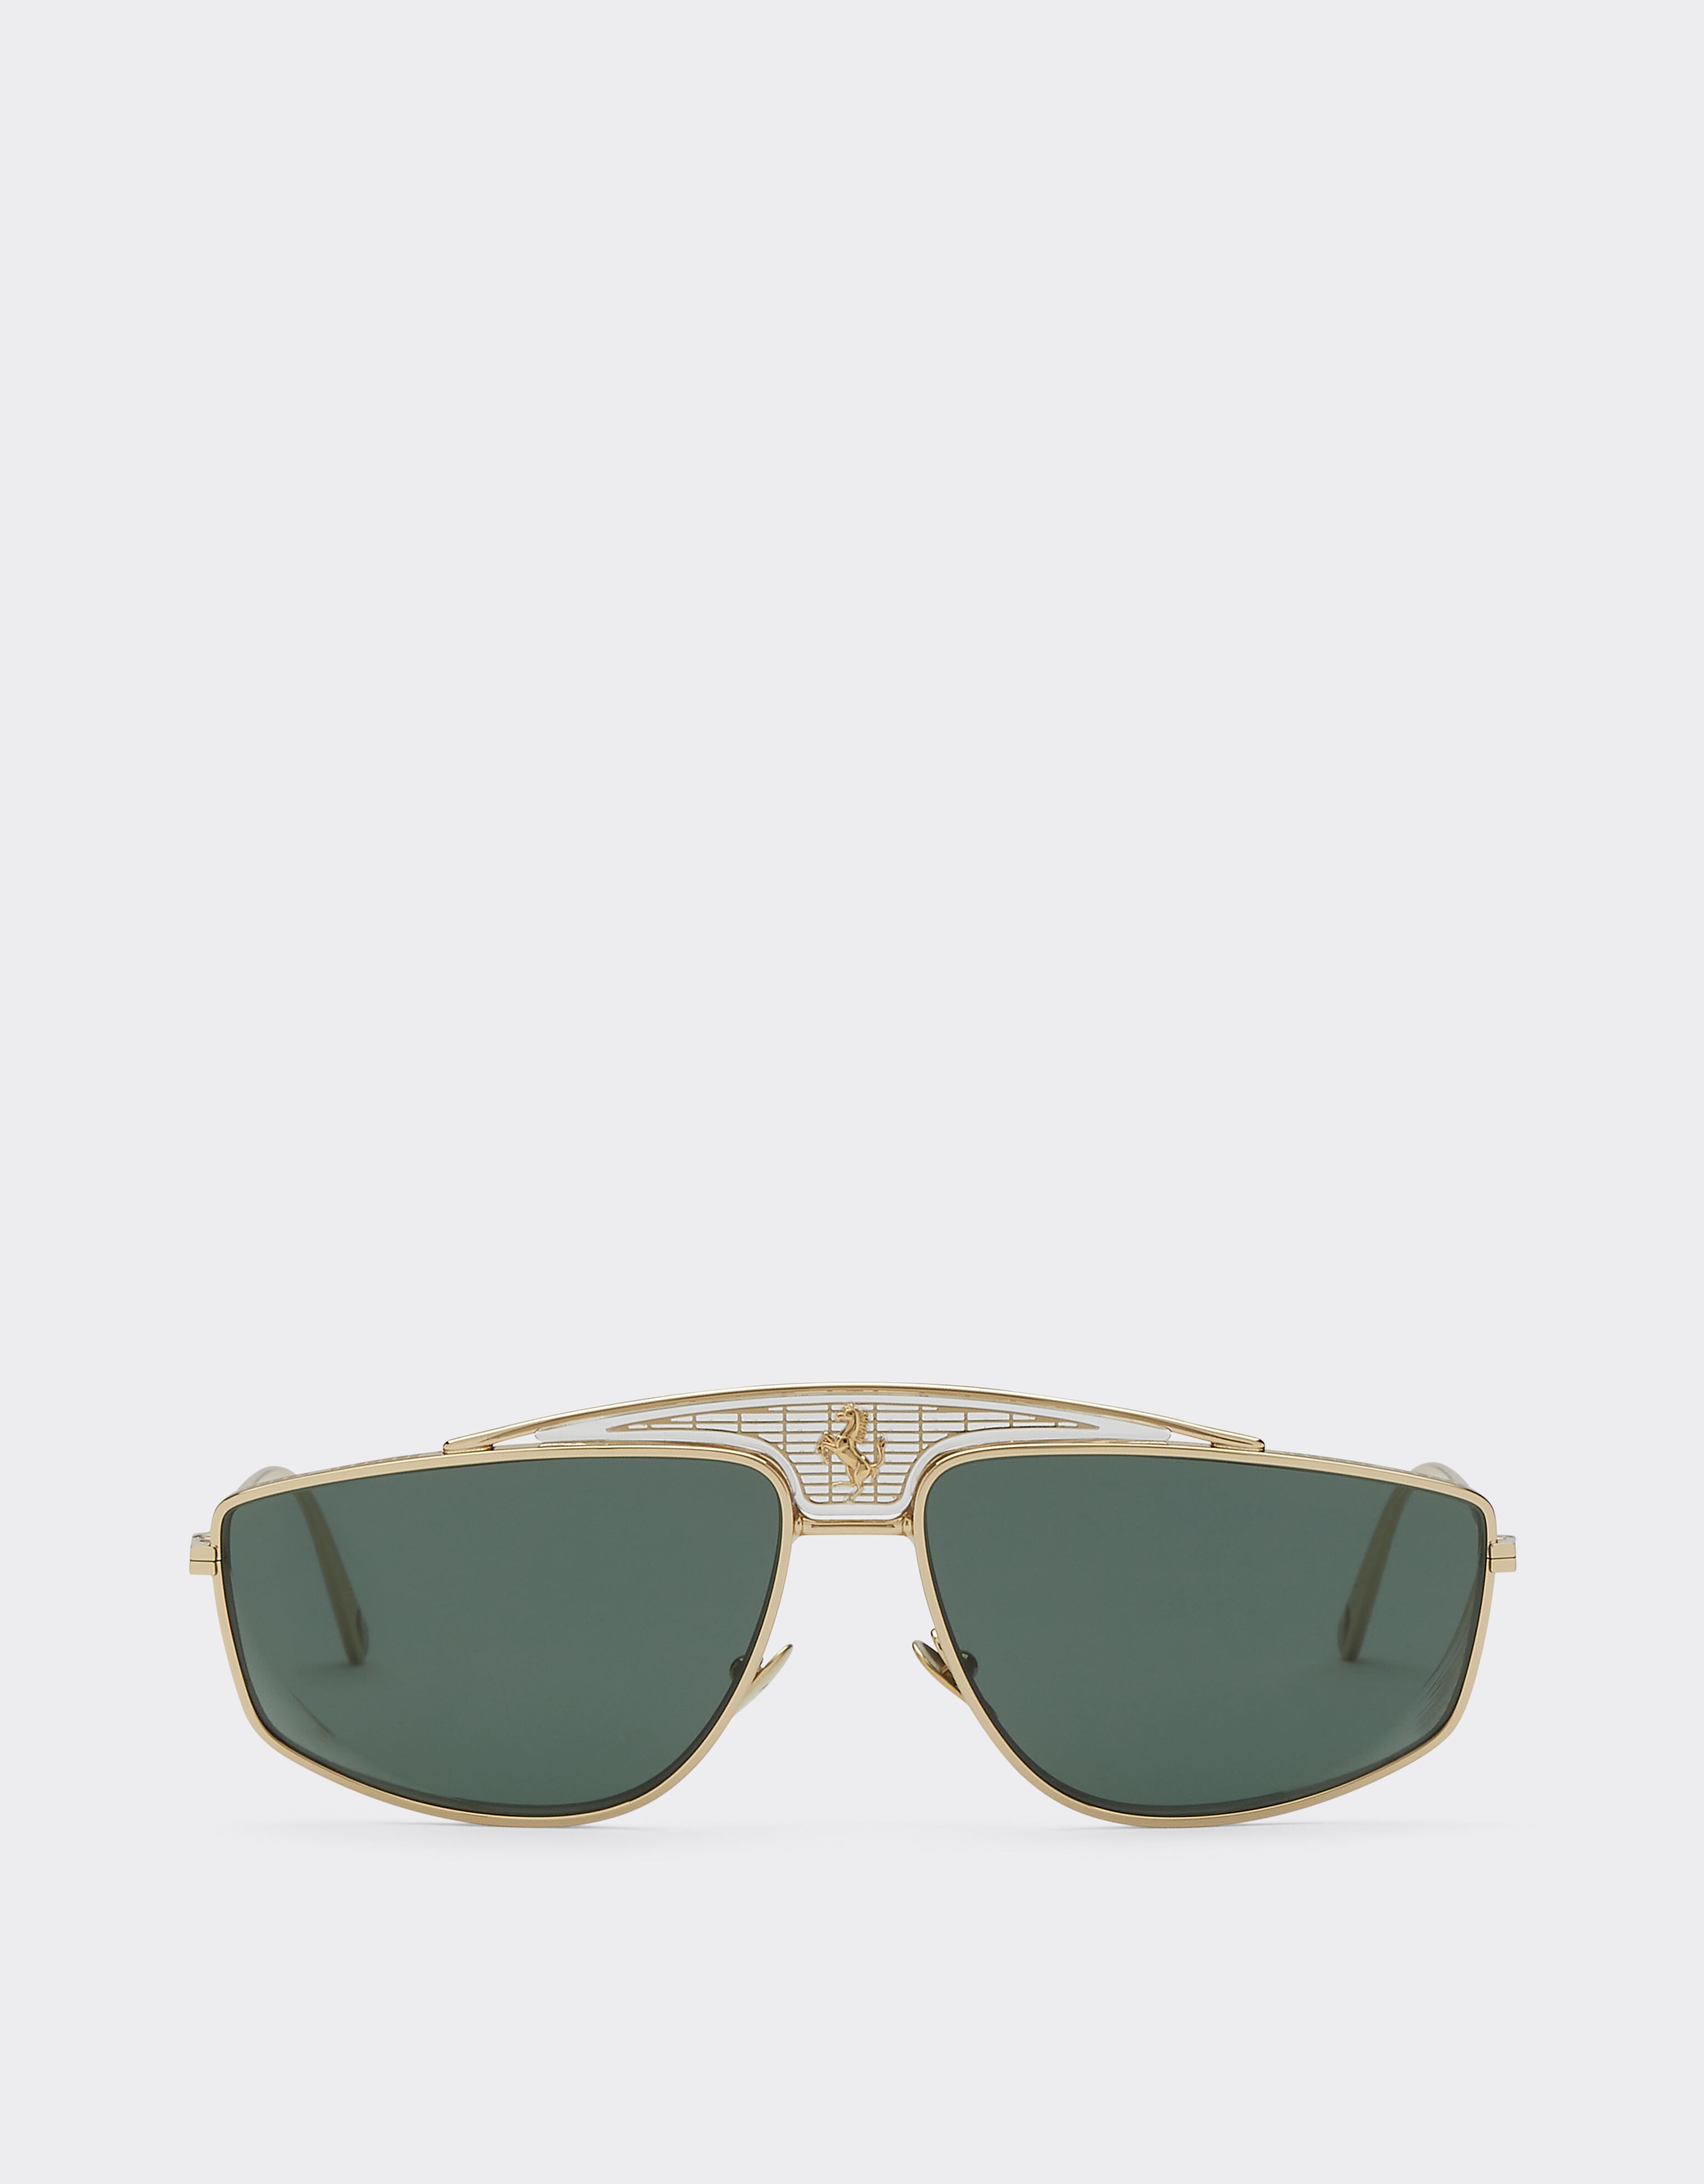 Ferrari Ferrari sunglasses with dark green lenses Gold F0411f